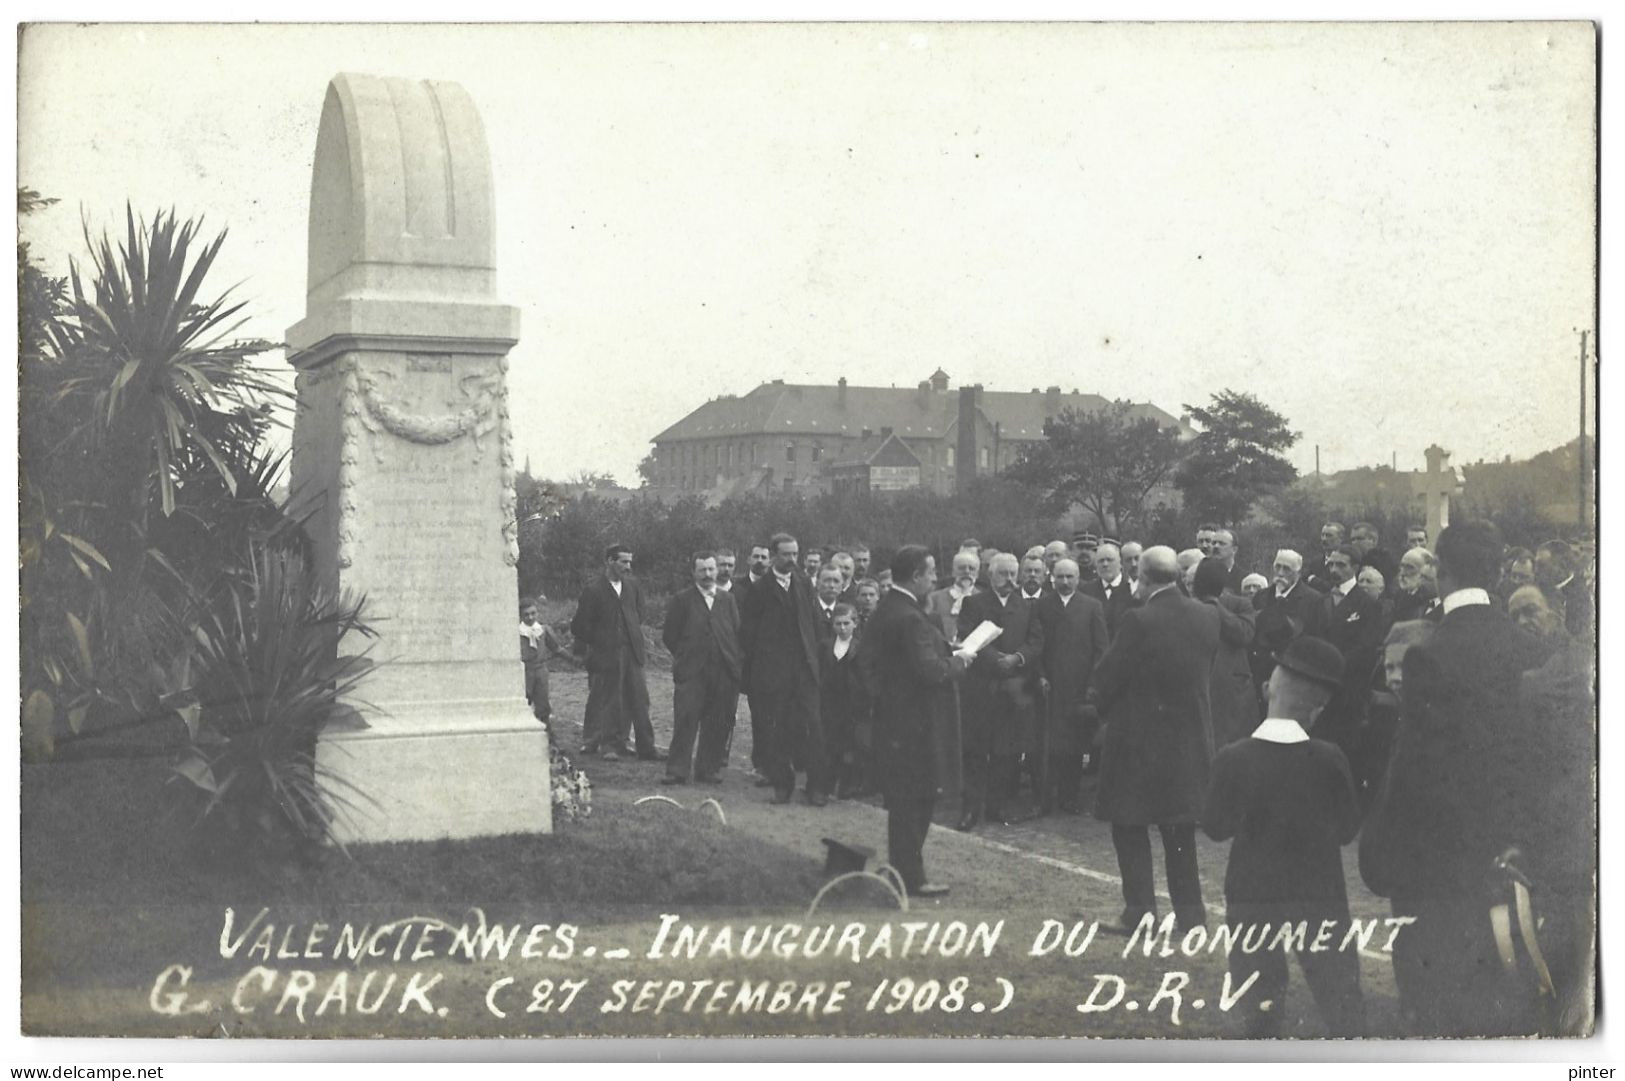 VALENCIENNES - Inauguration Du Monument G. CRAUK - 27 Septembre 1908 - CARTE PHOTO - Valenciennes